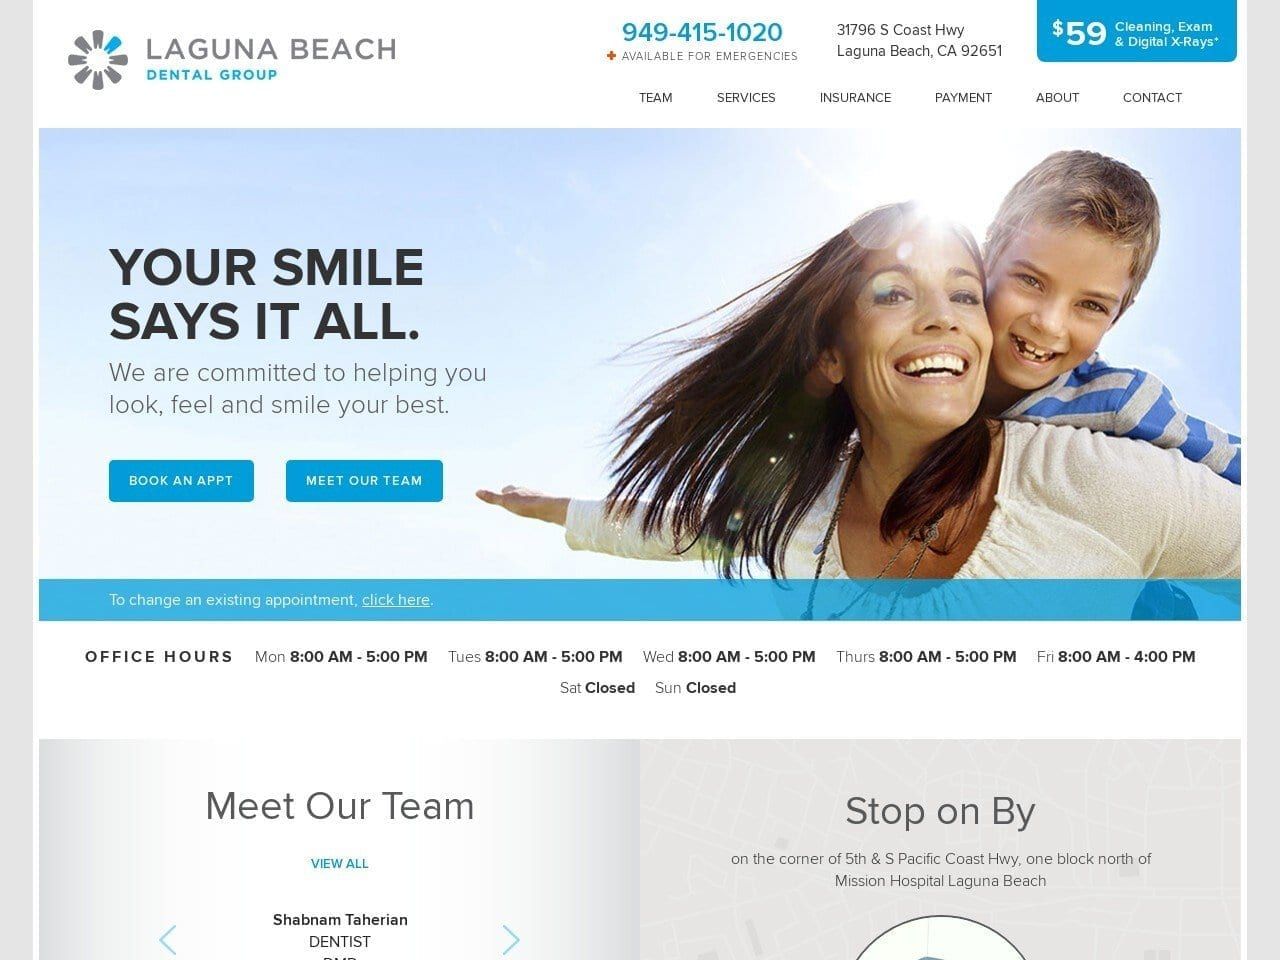 Laguna Beach Dental Group Website Screenshot from lagunabeachdental.com